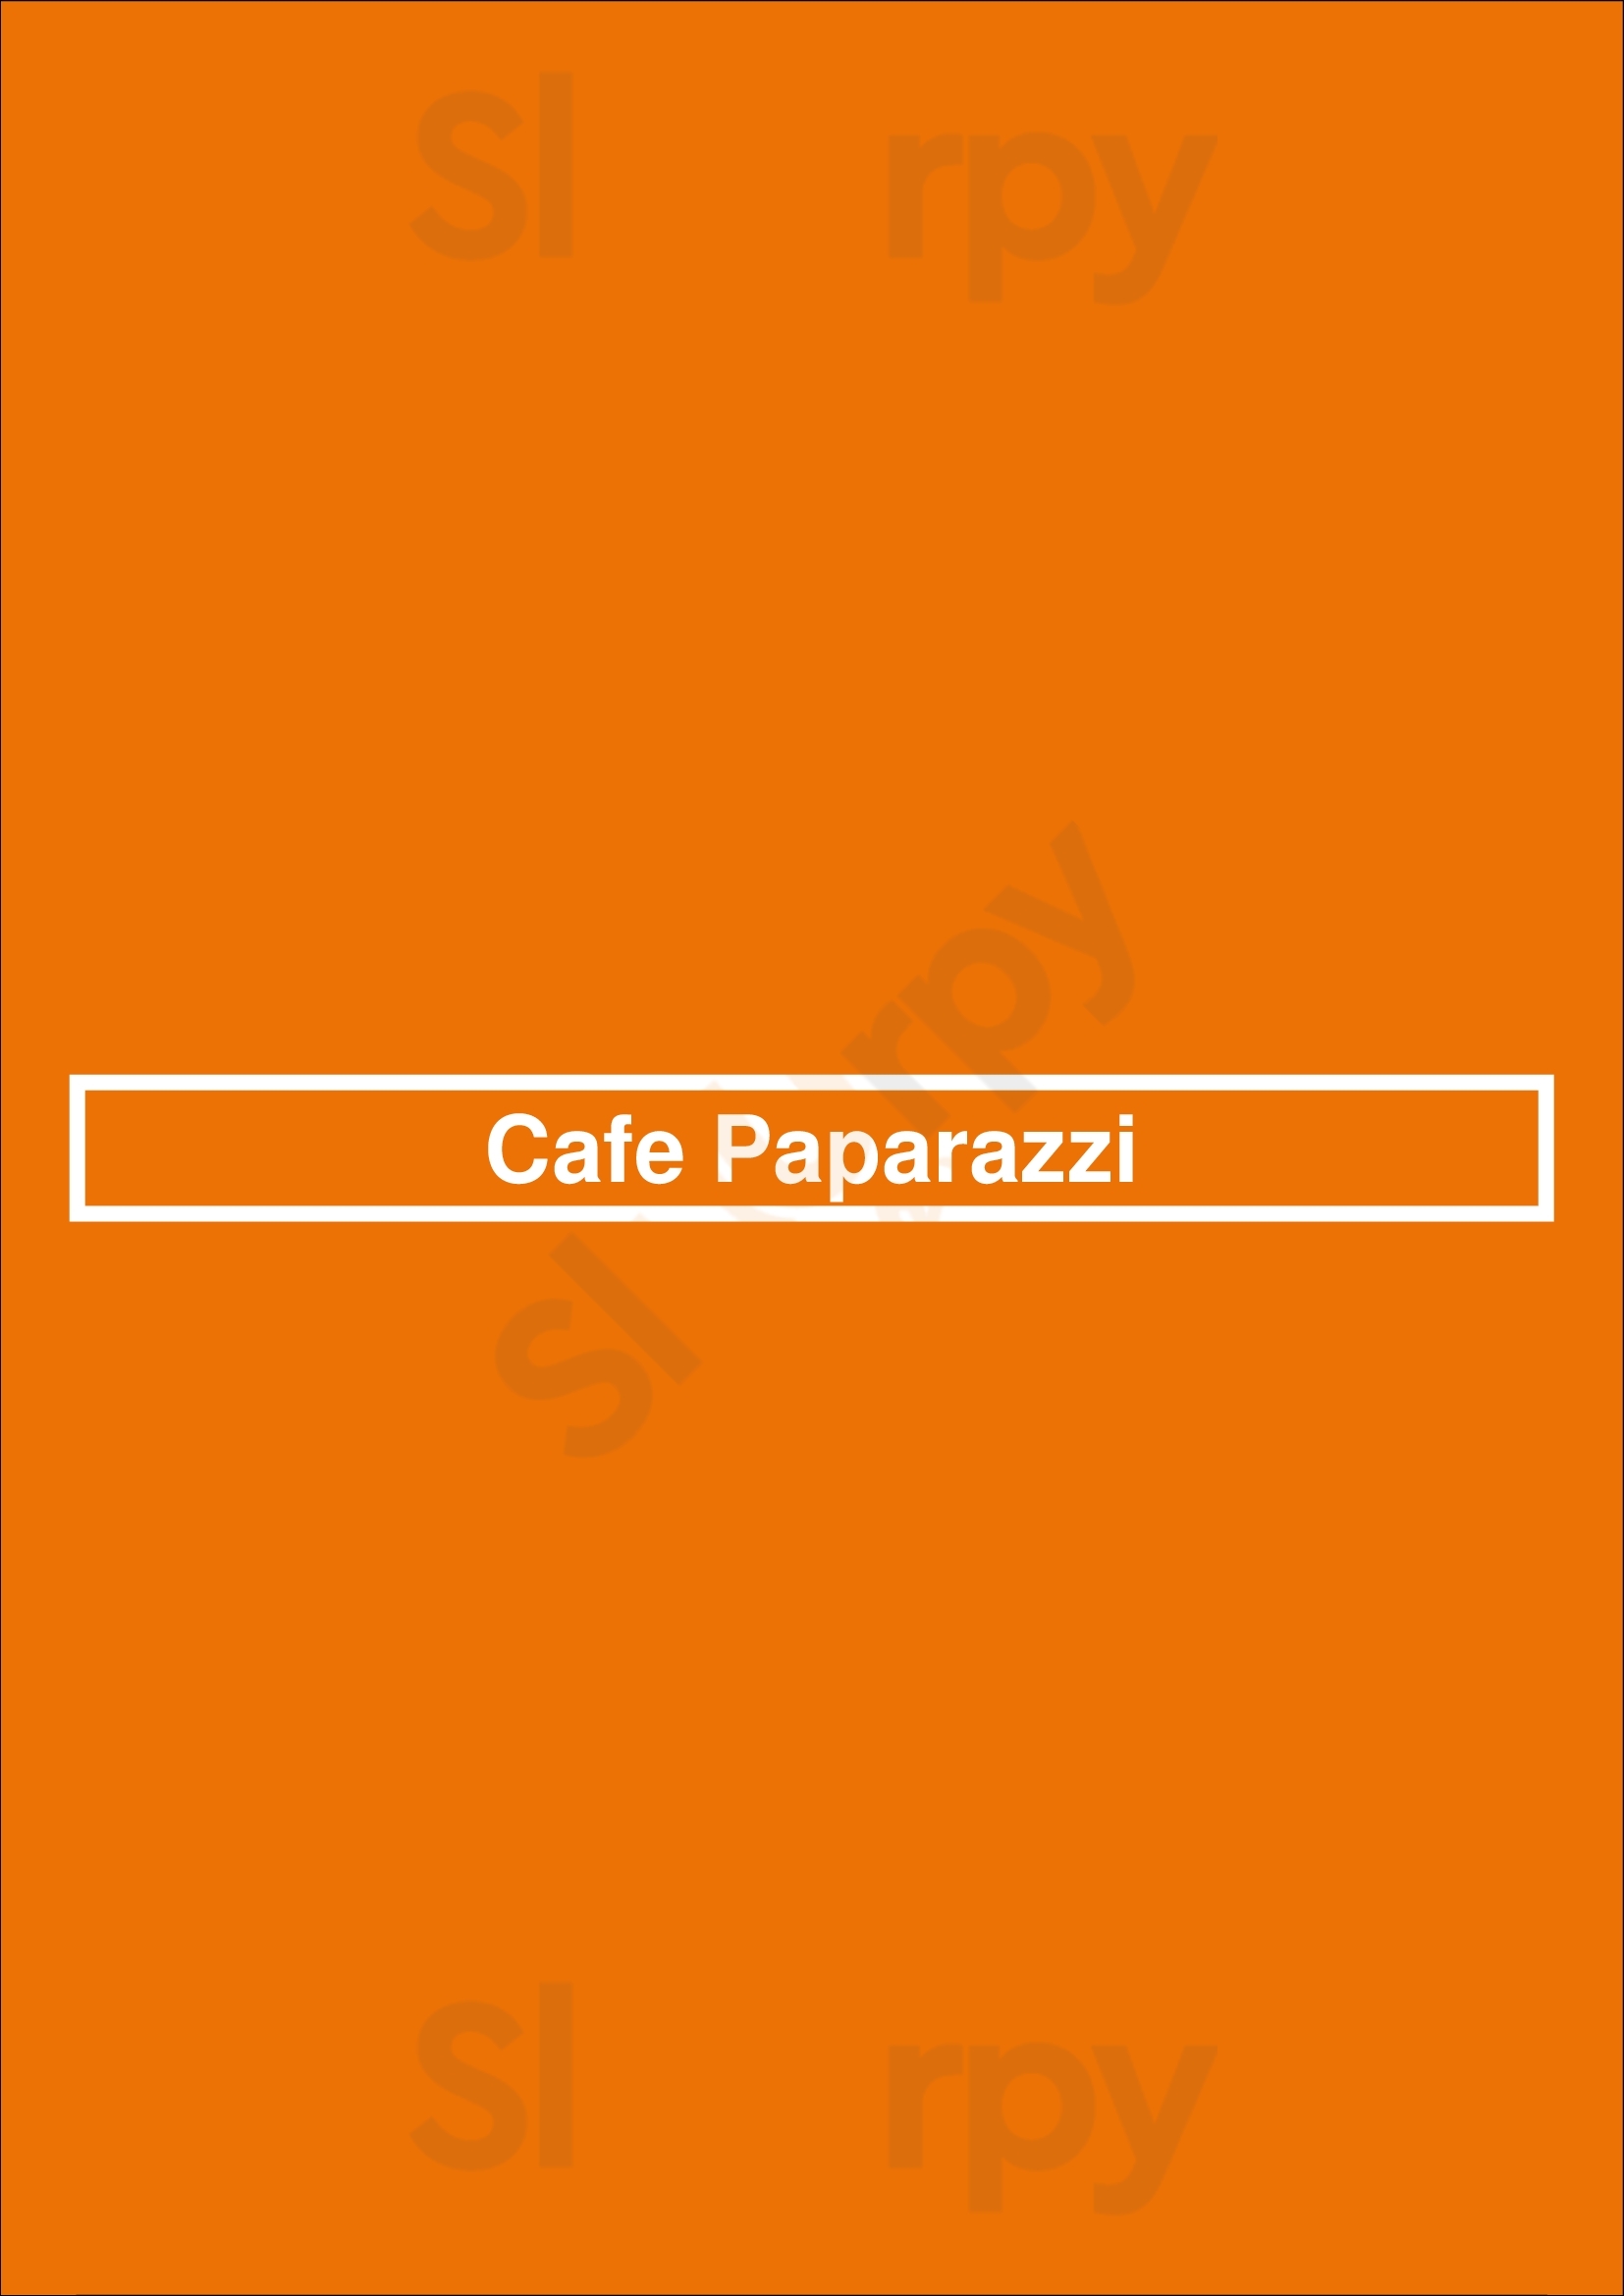 Cafe Paparazzi Malvern Menu - 1